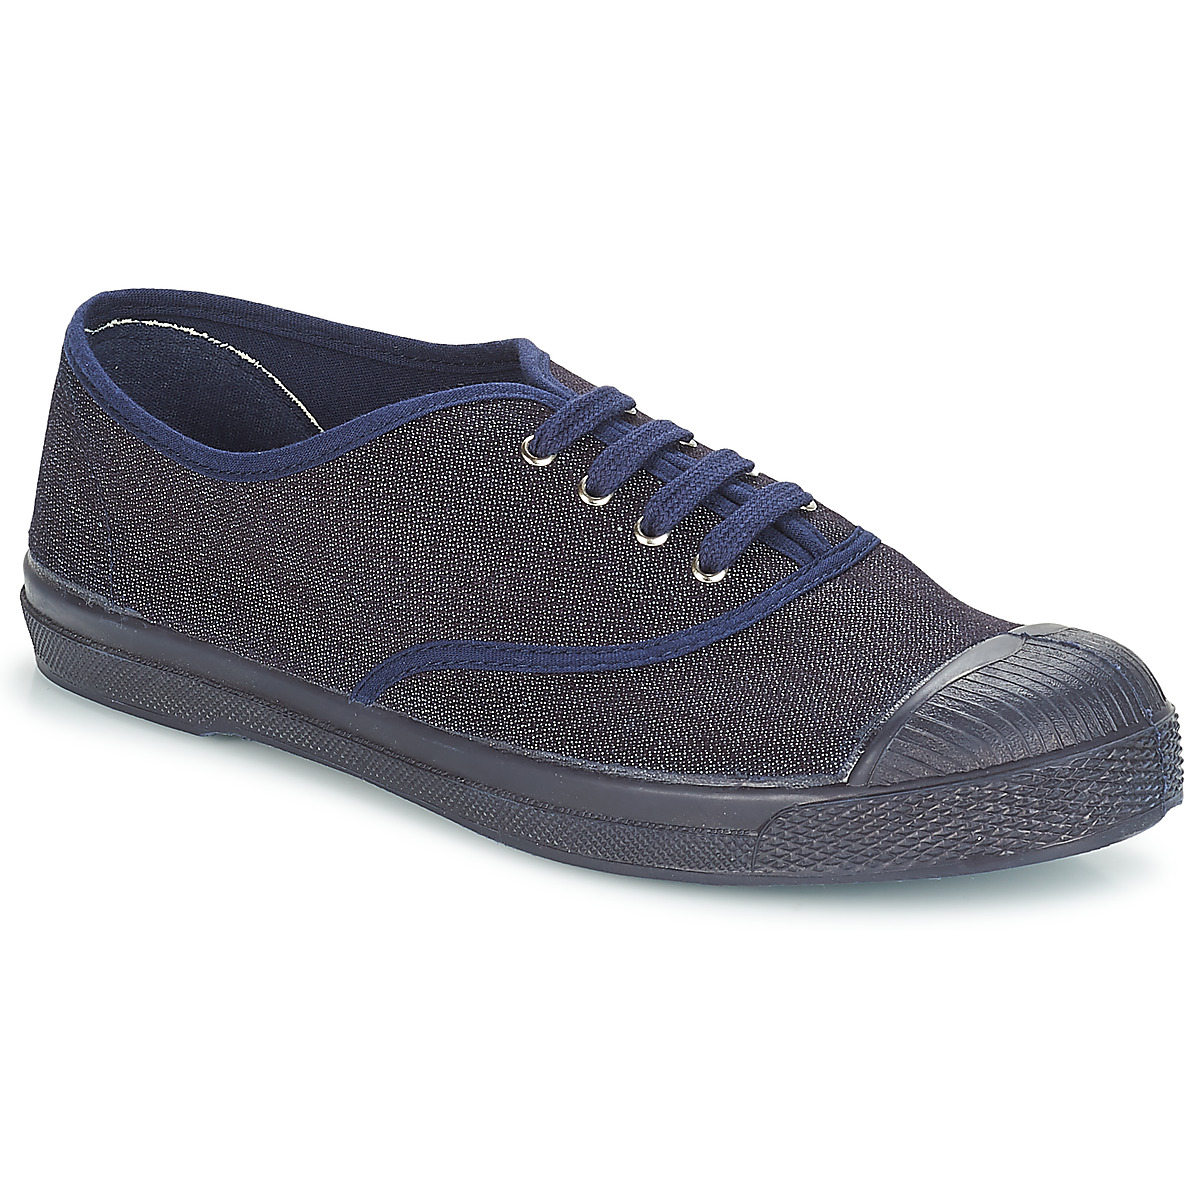 bensimon  tennis lacet  women's shoes (trainers) in blue